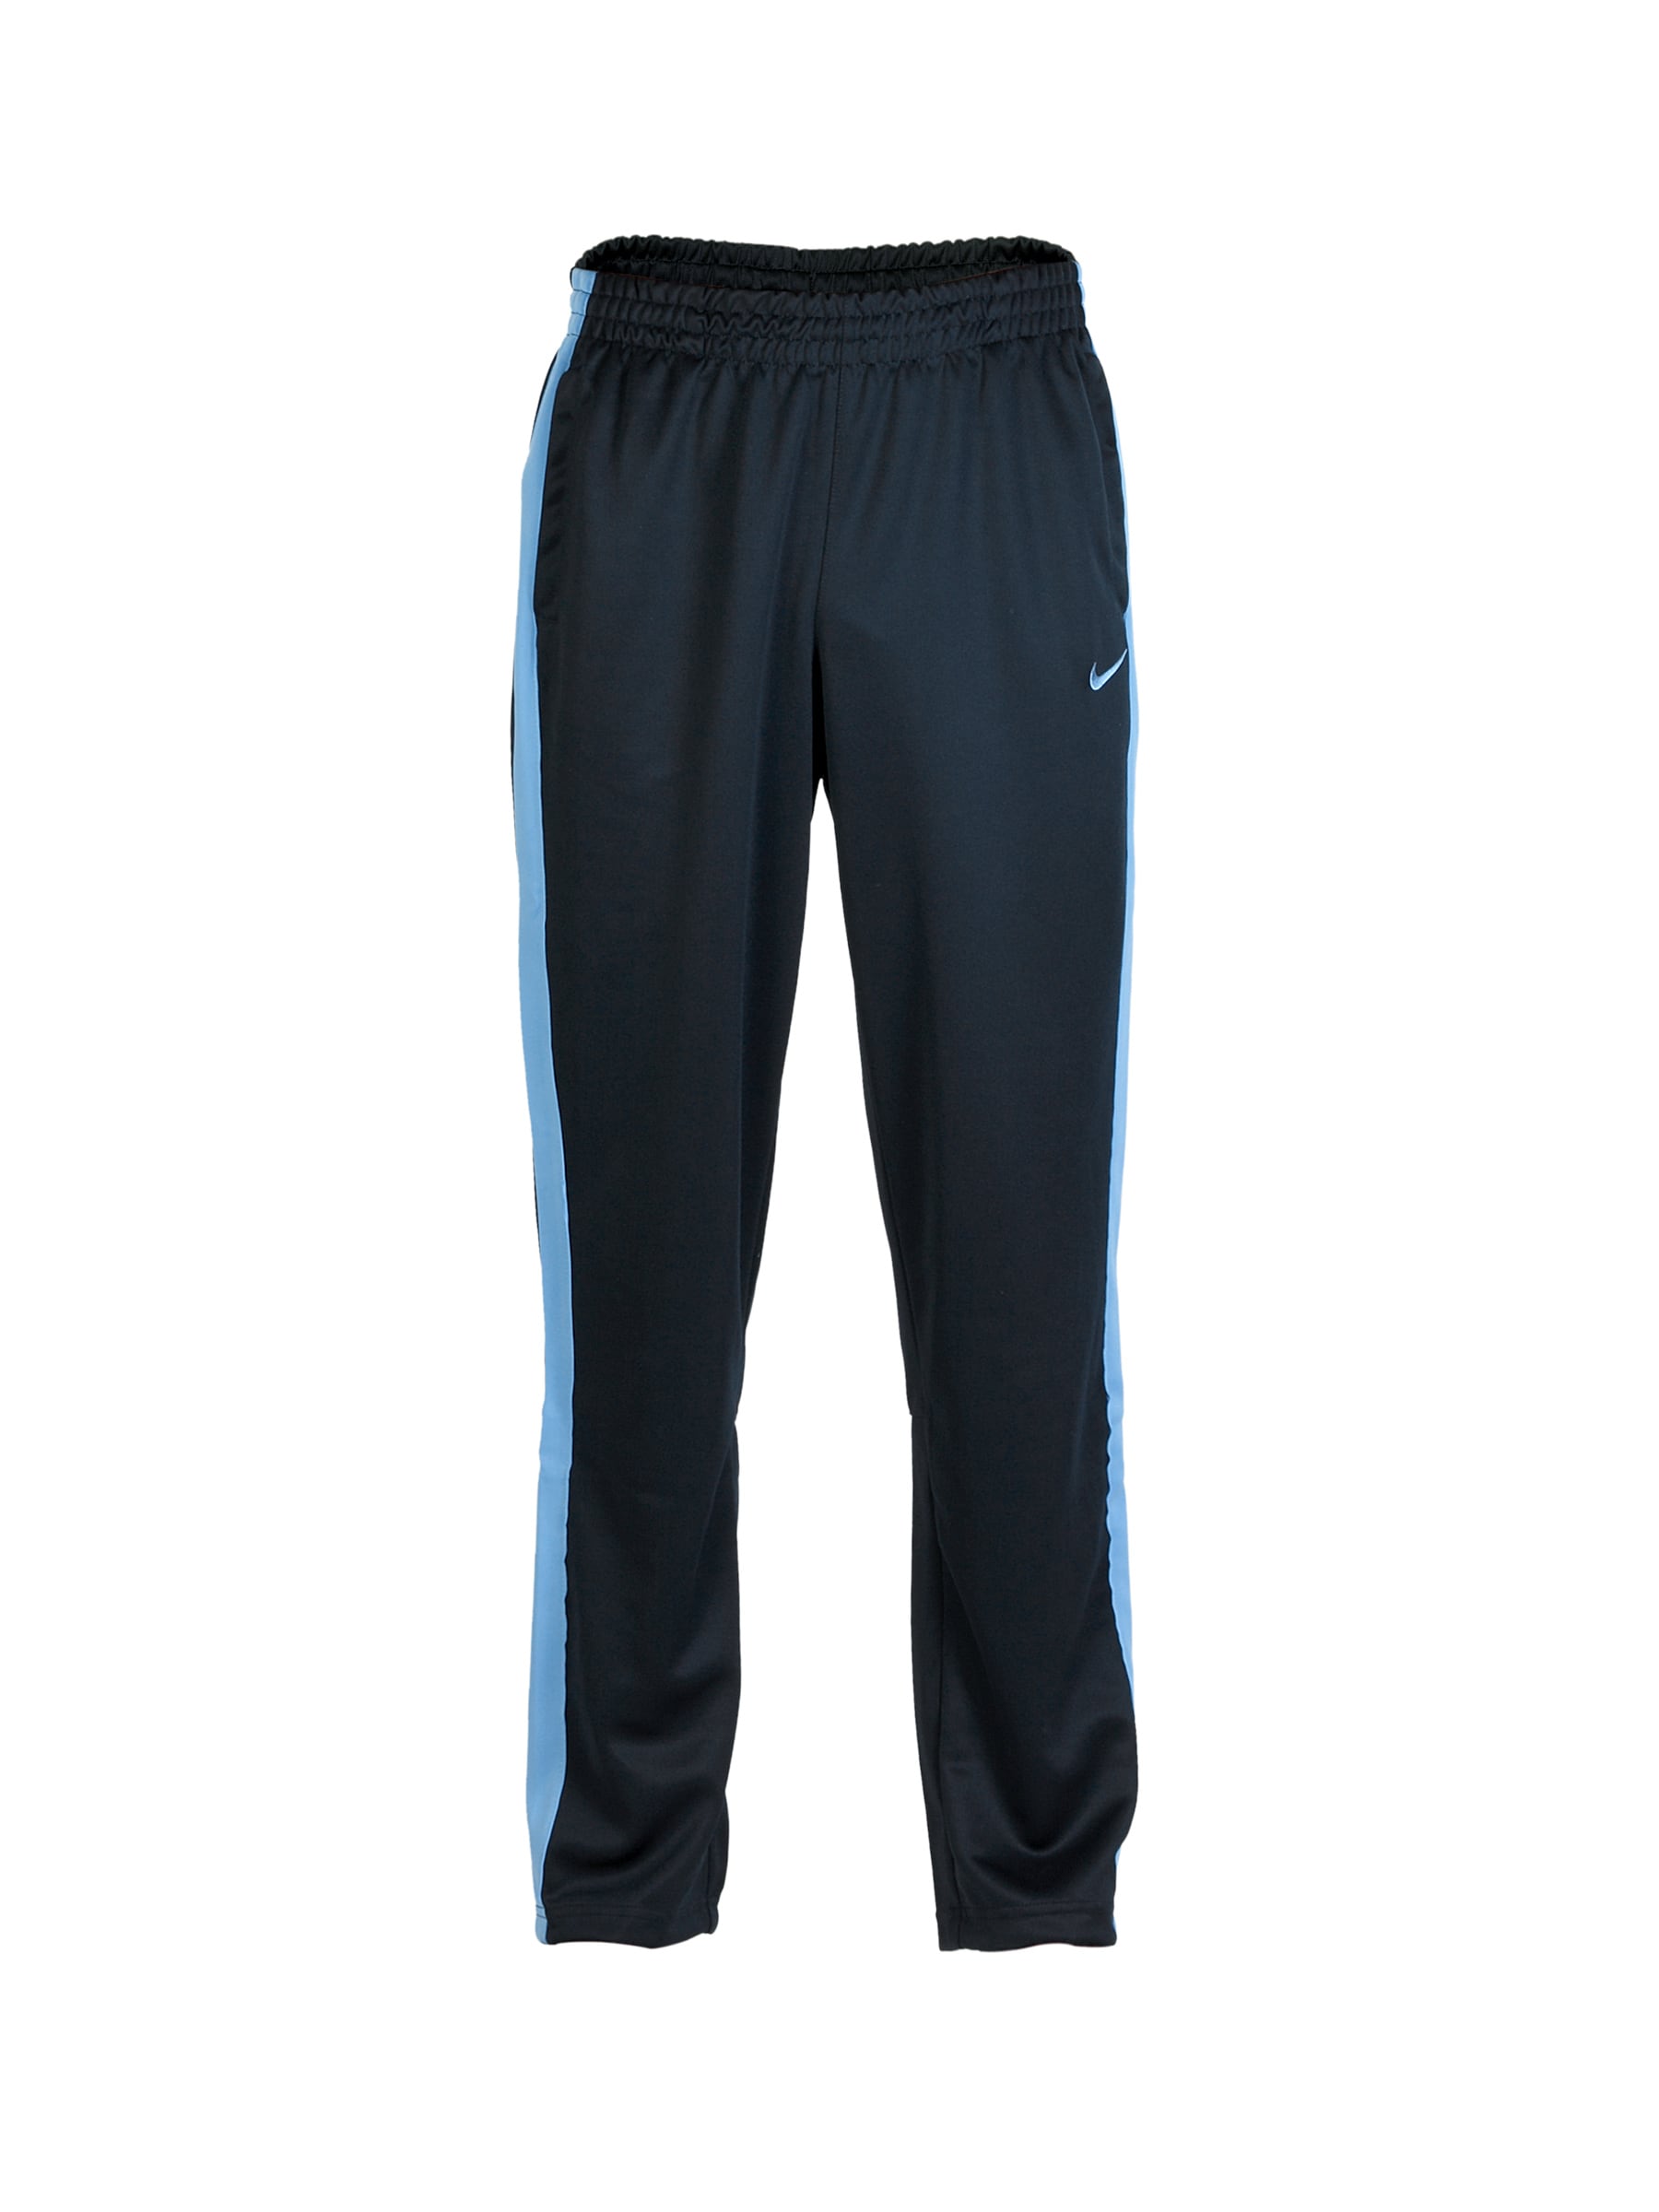 Nike Men AD Striker Navy Blue Track Pants